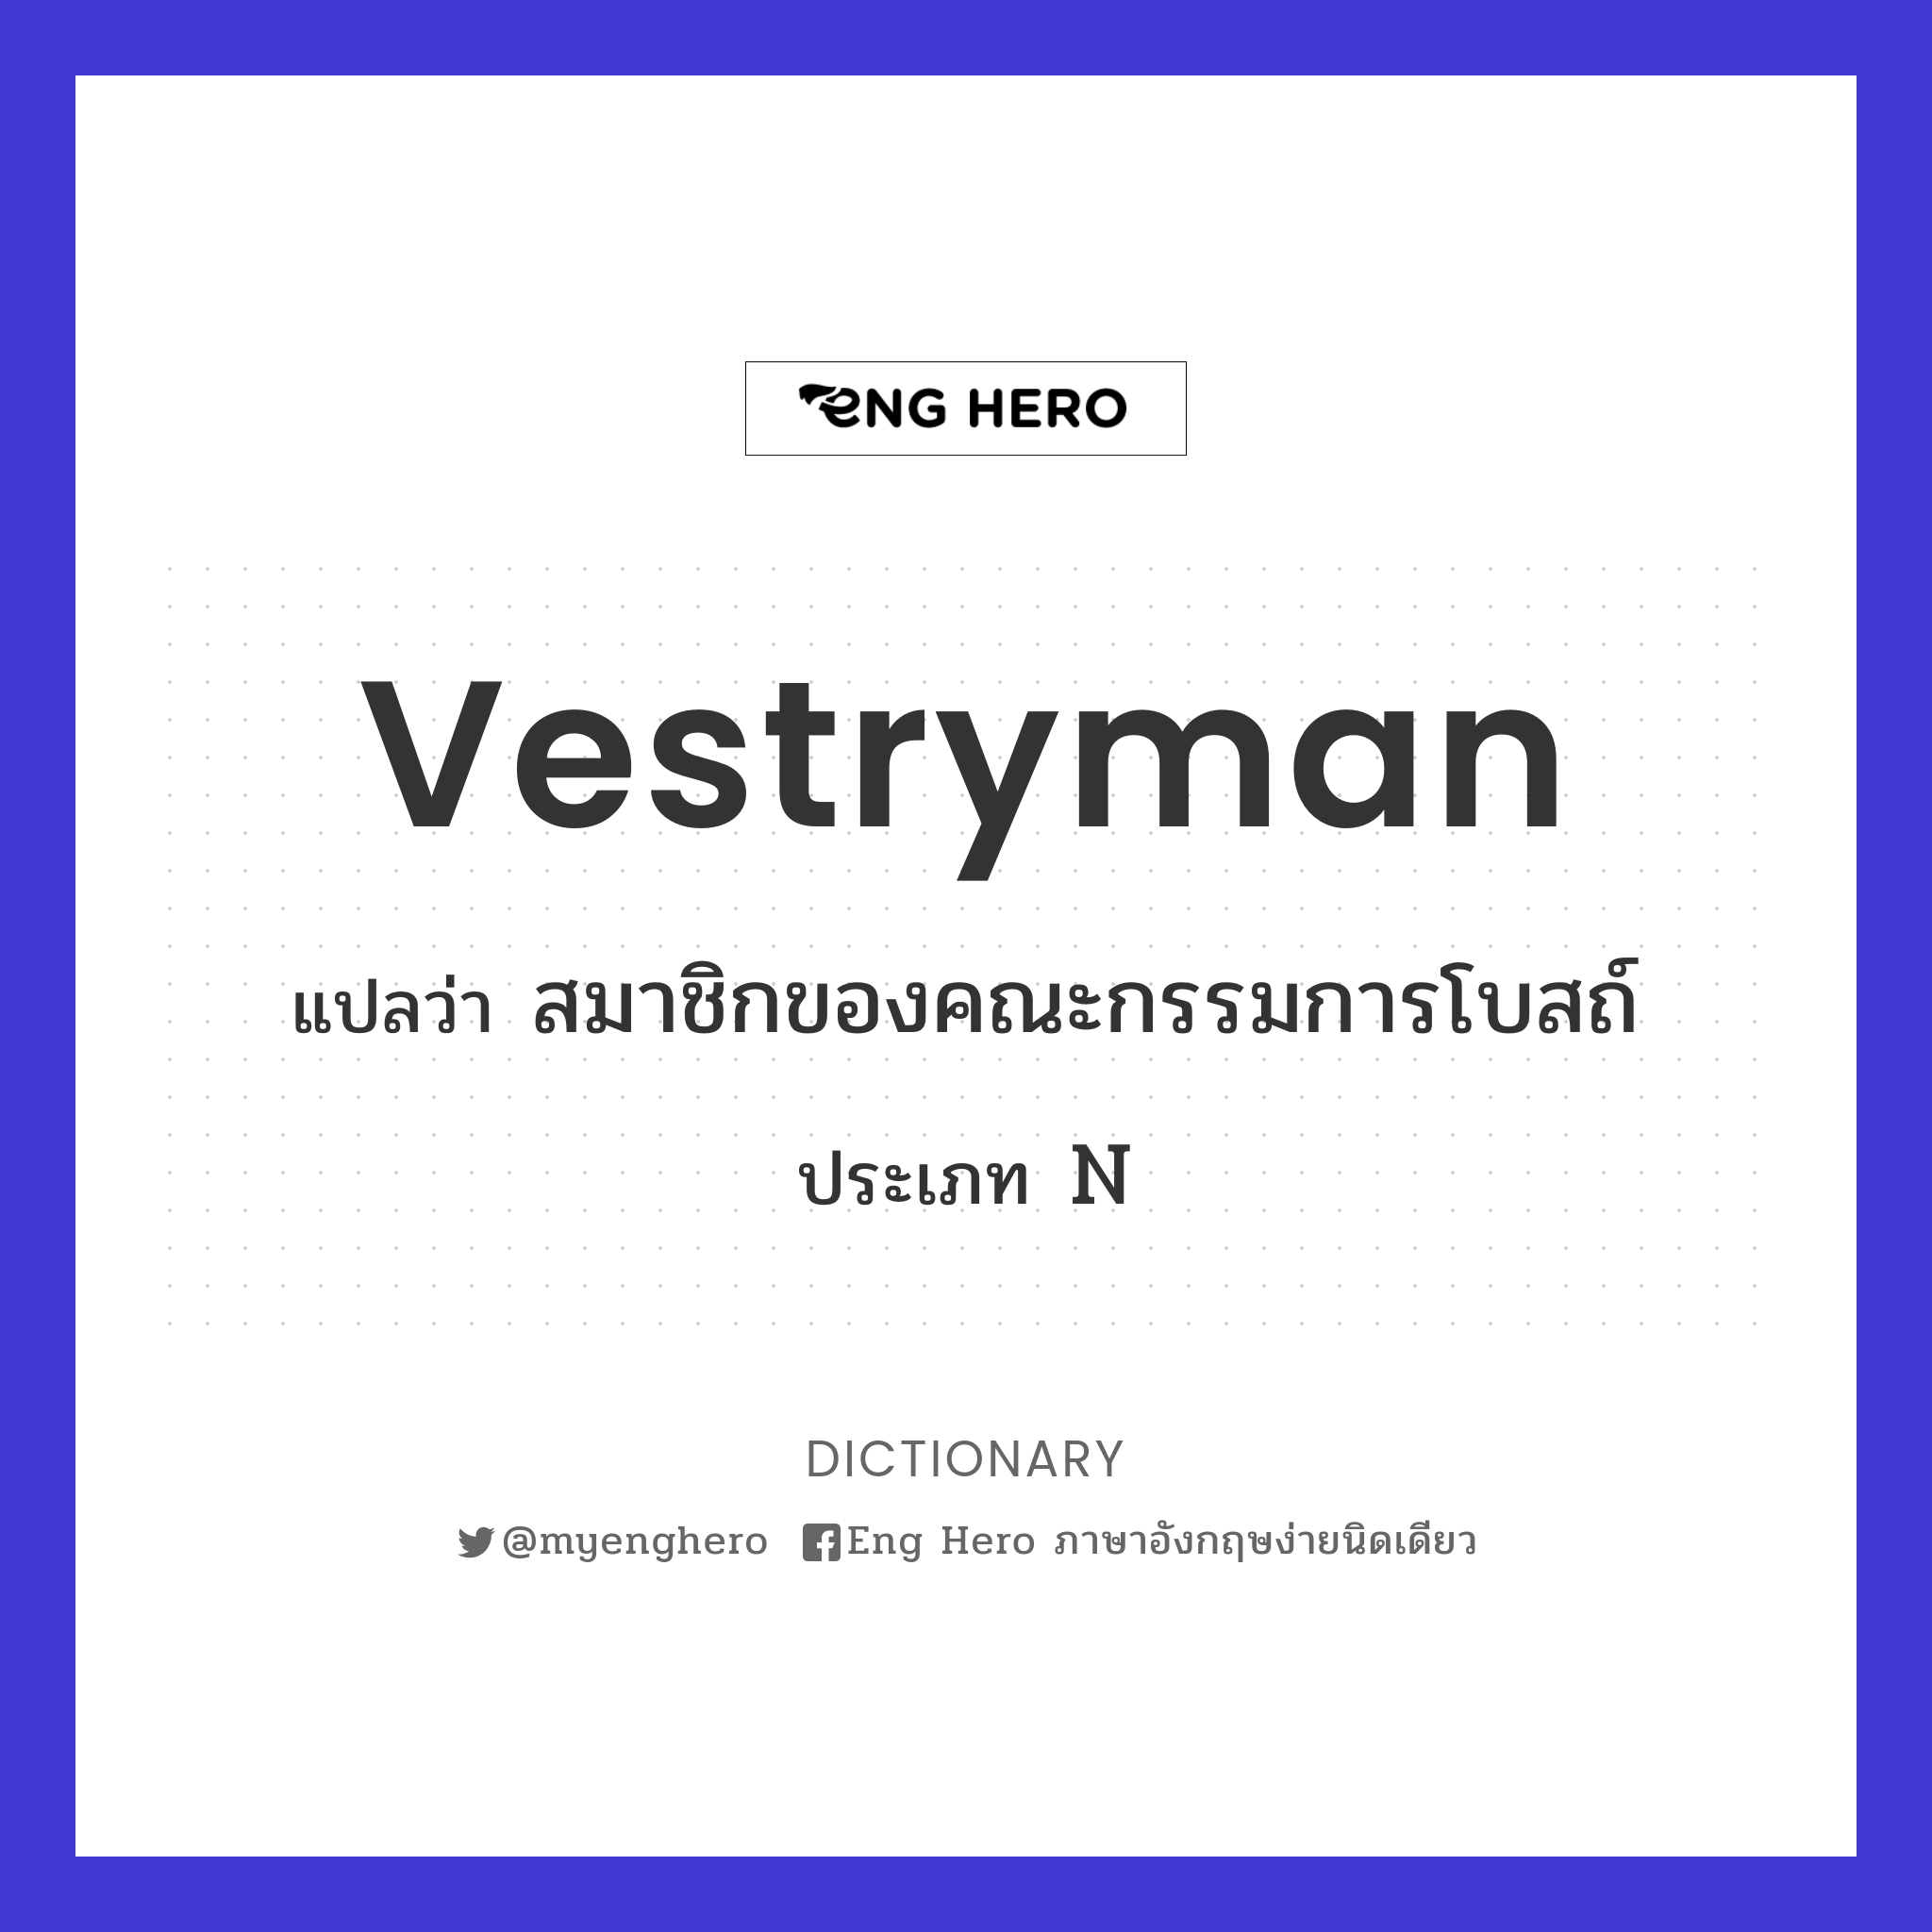 vestryman